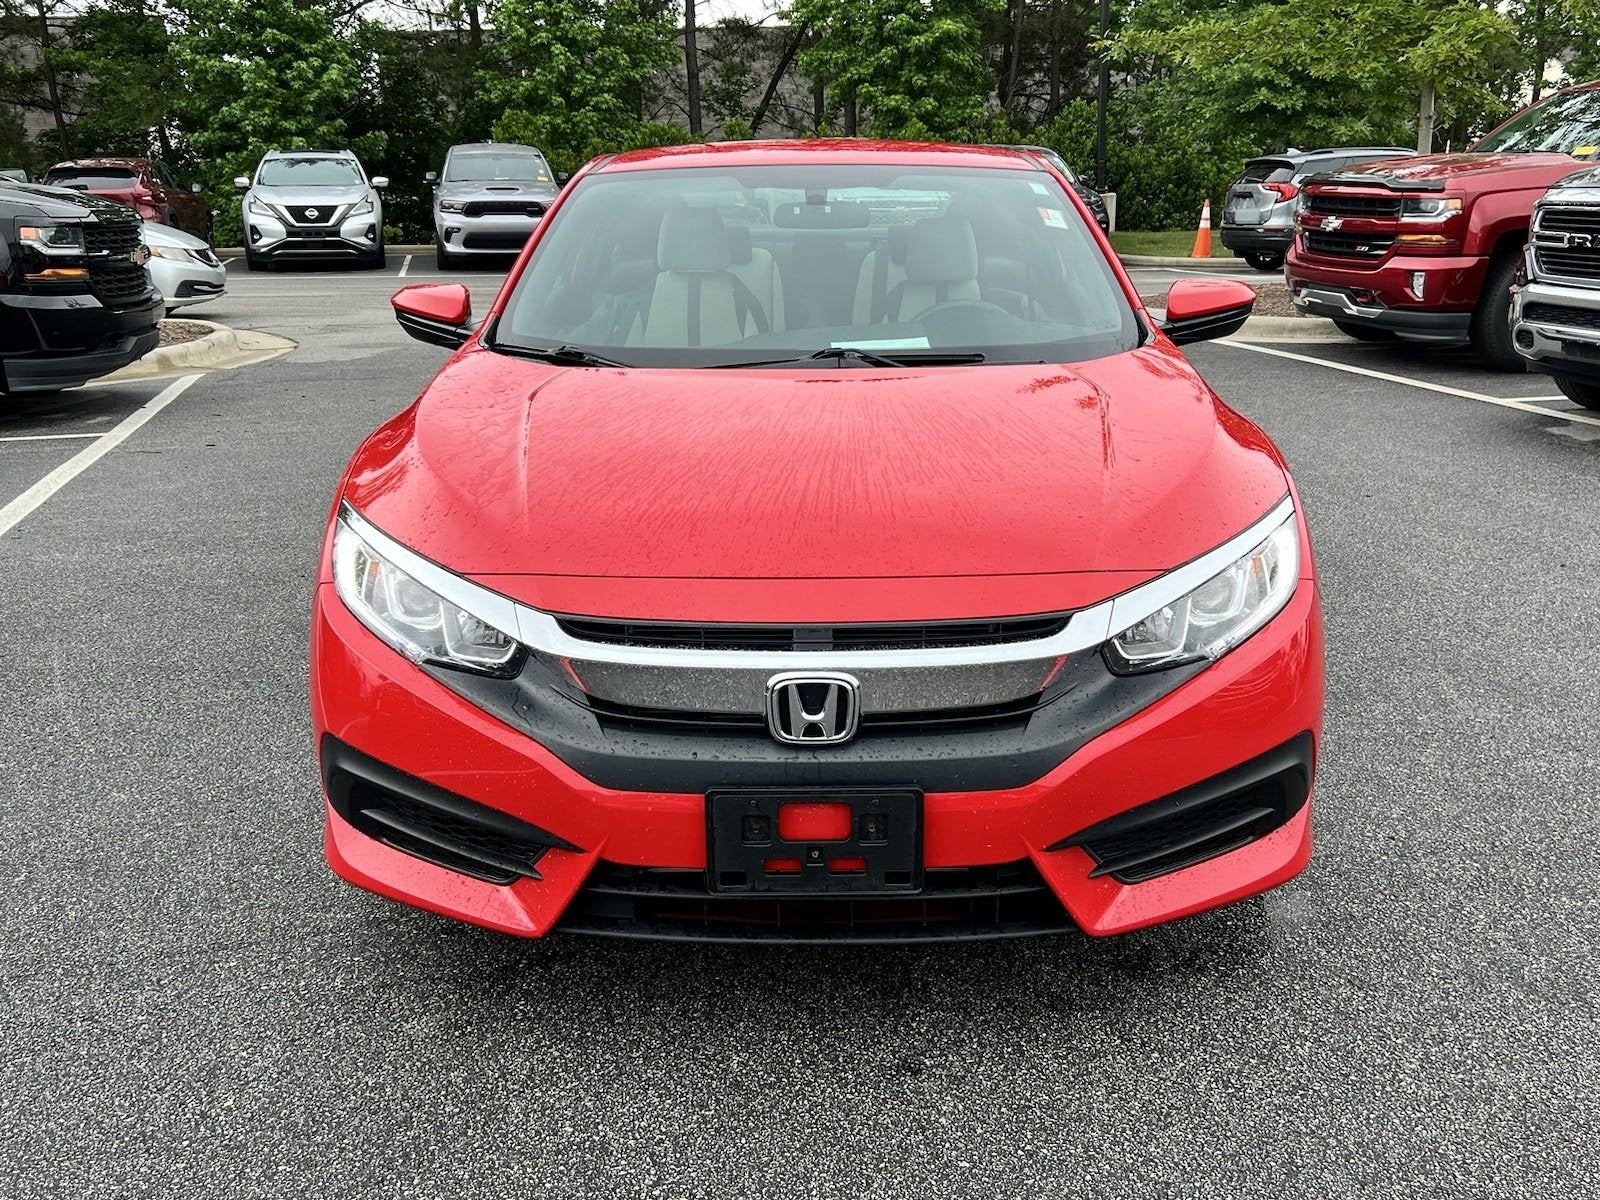 2017 Honda Civic Coupe LX